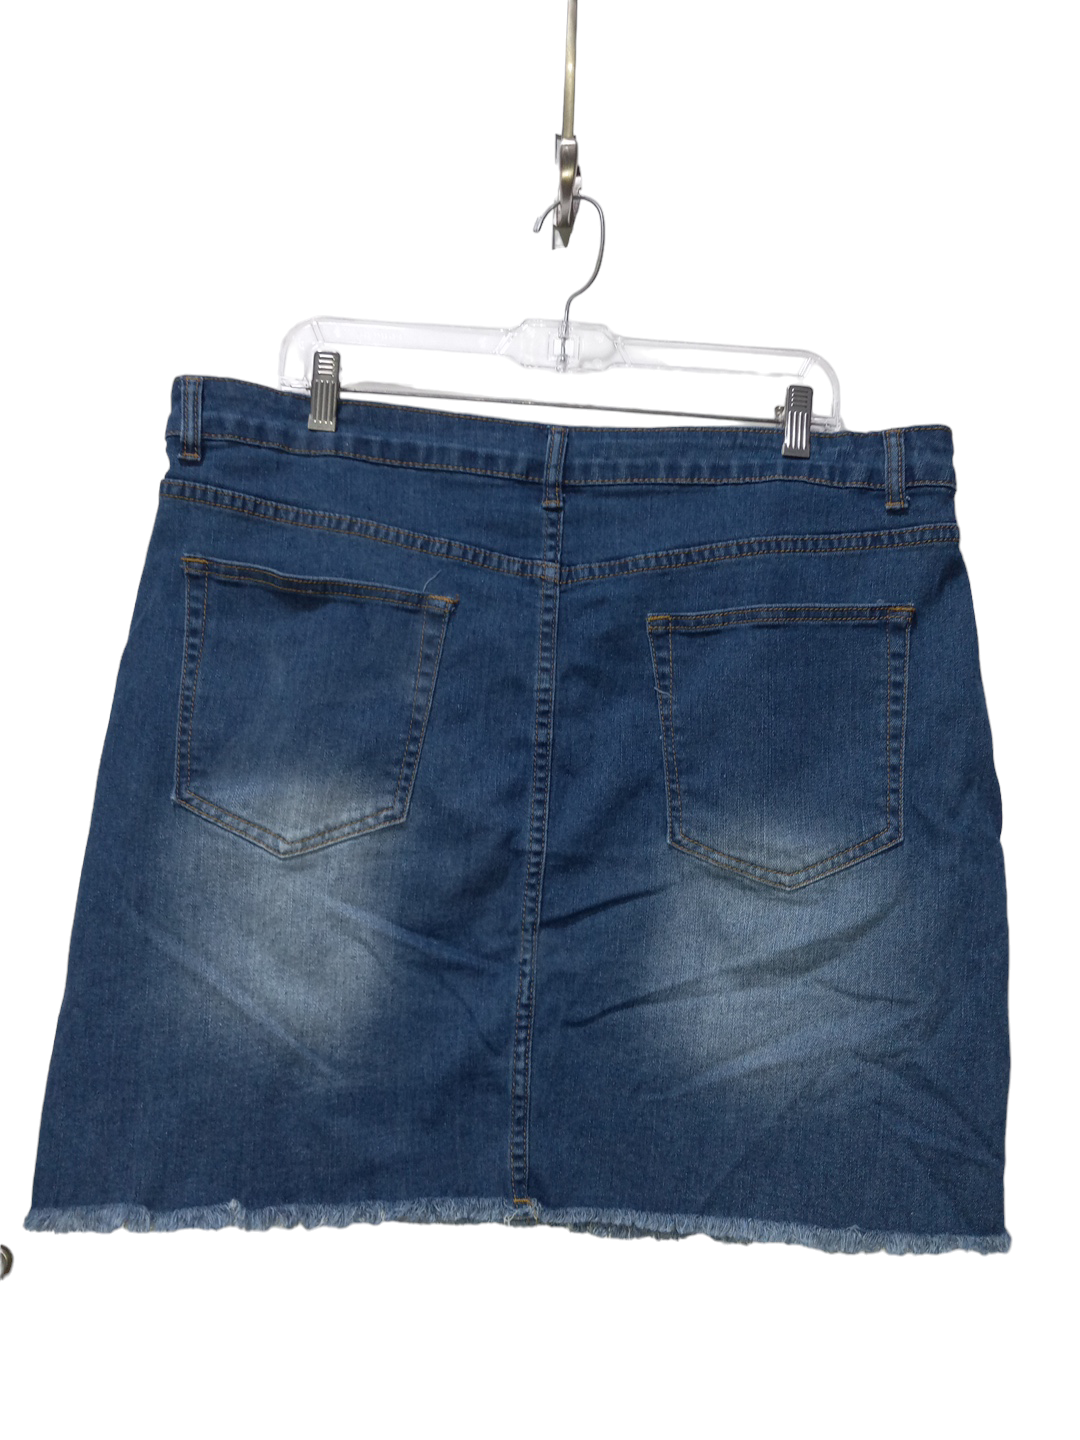 Blue Denim Skirt Midi Clothes Mentor, Size 3x